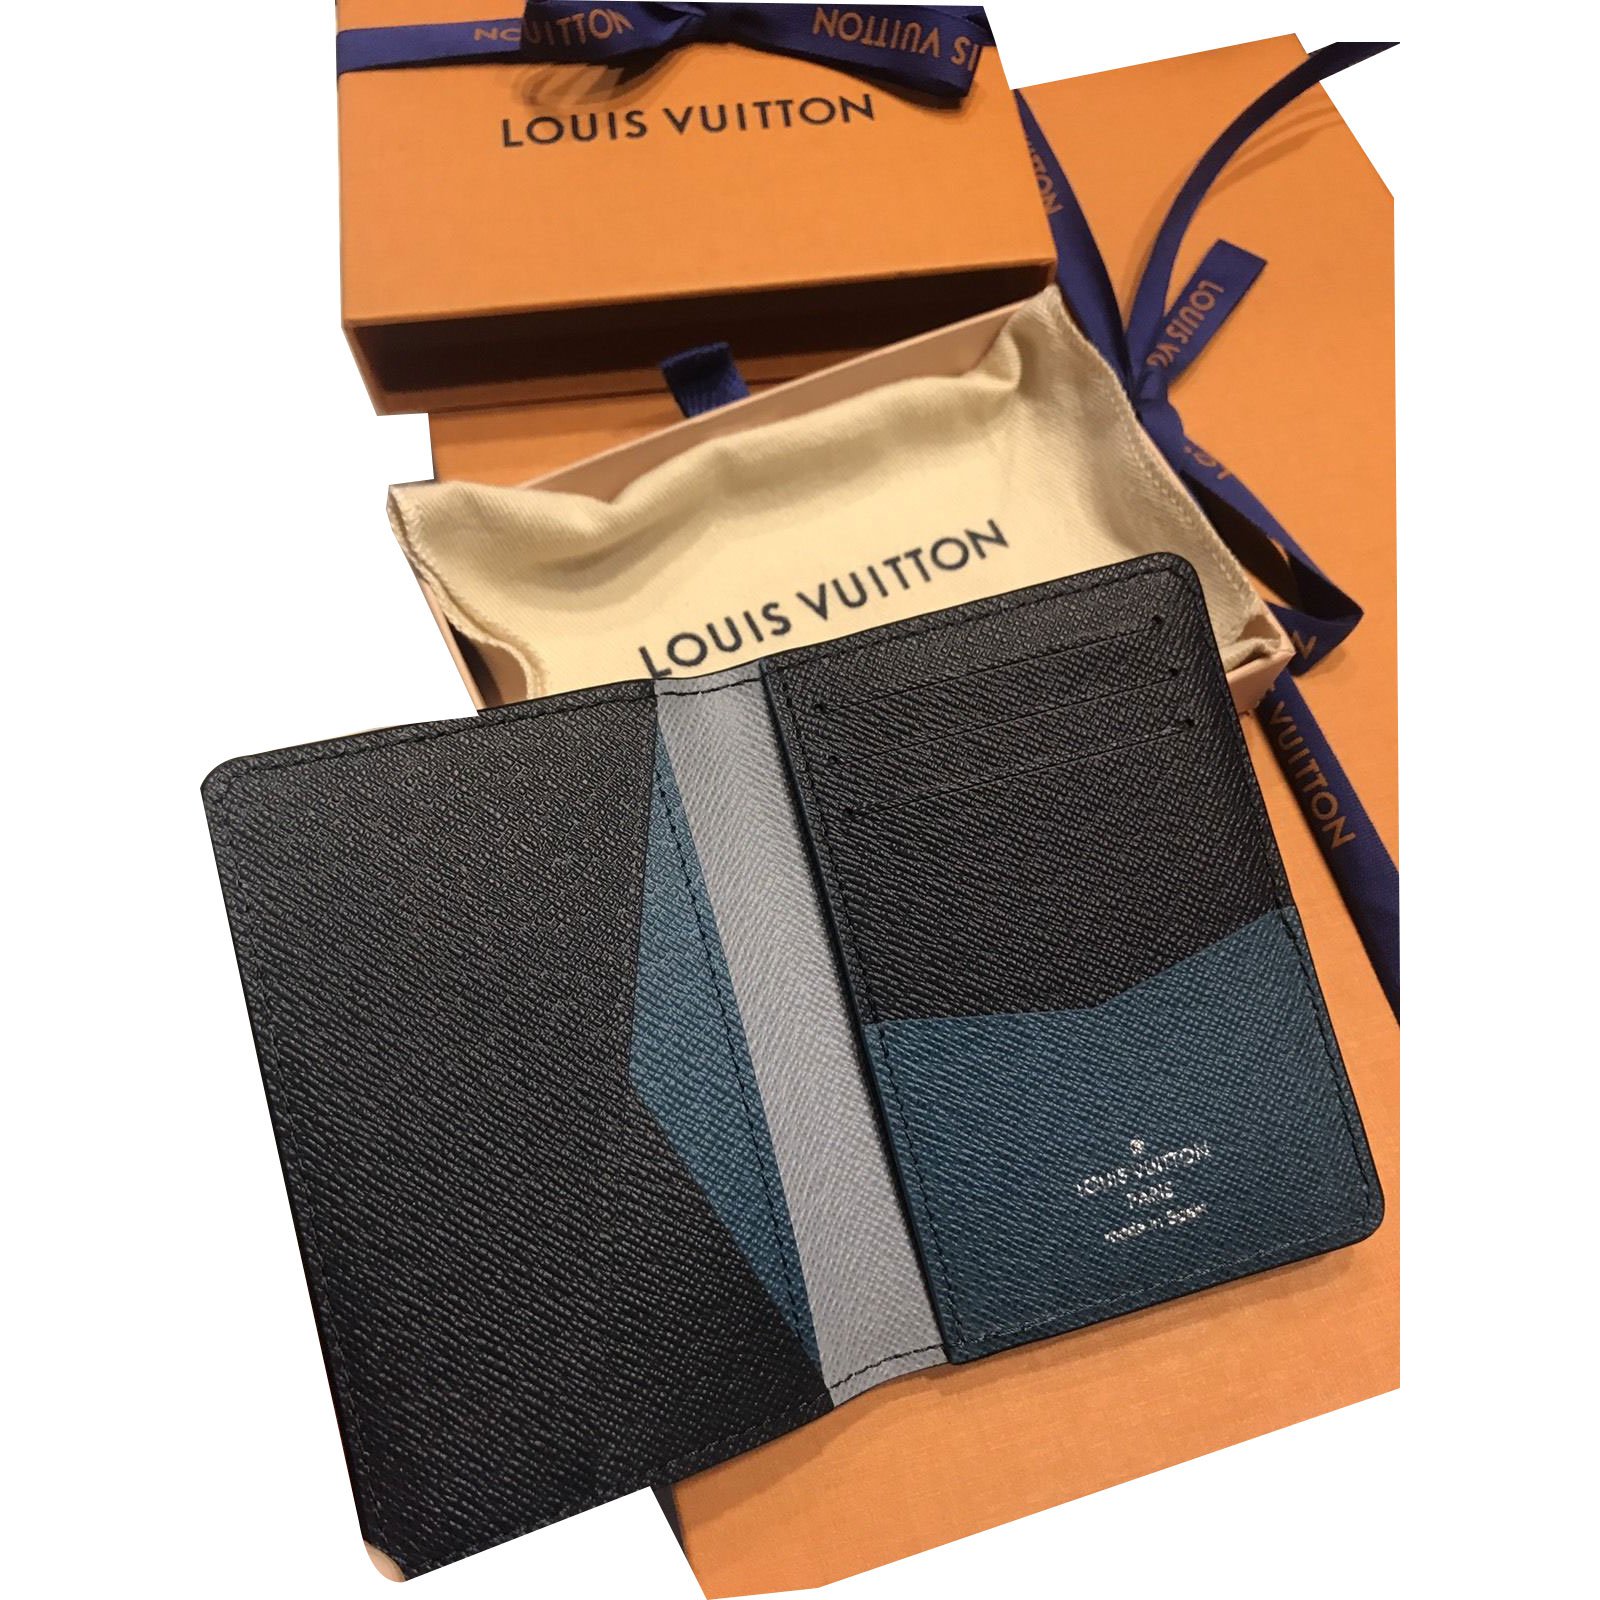 Louis Vuitton x Supreme De Poche SP Cardholder / Card Organiser in